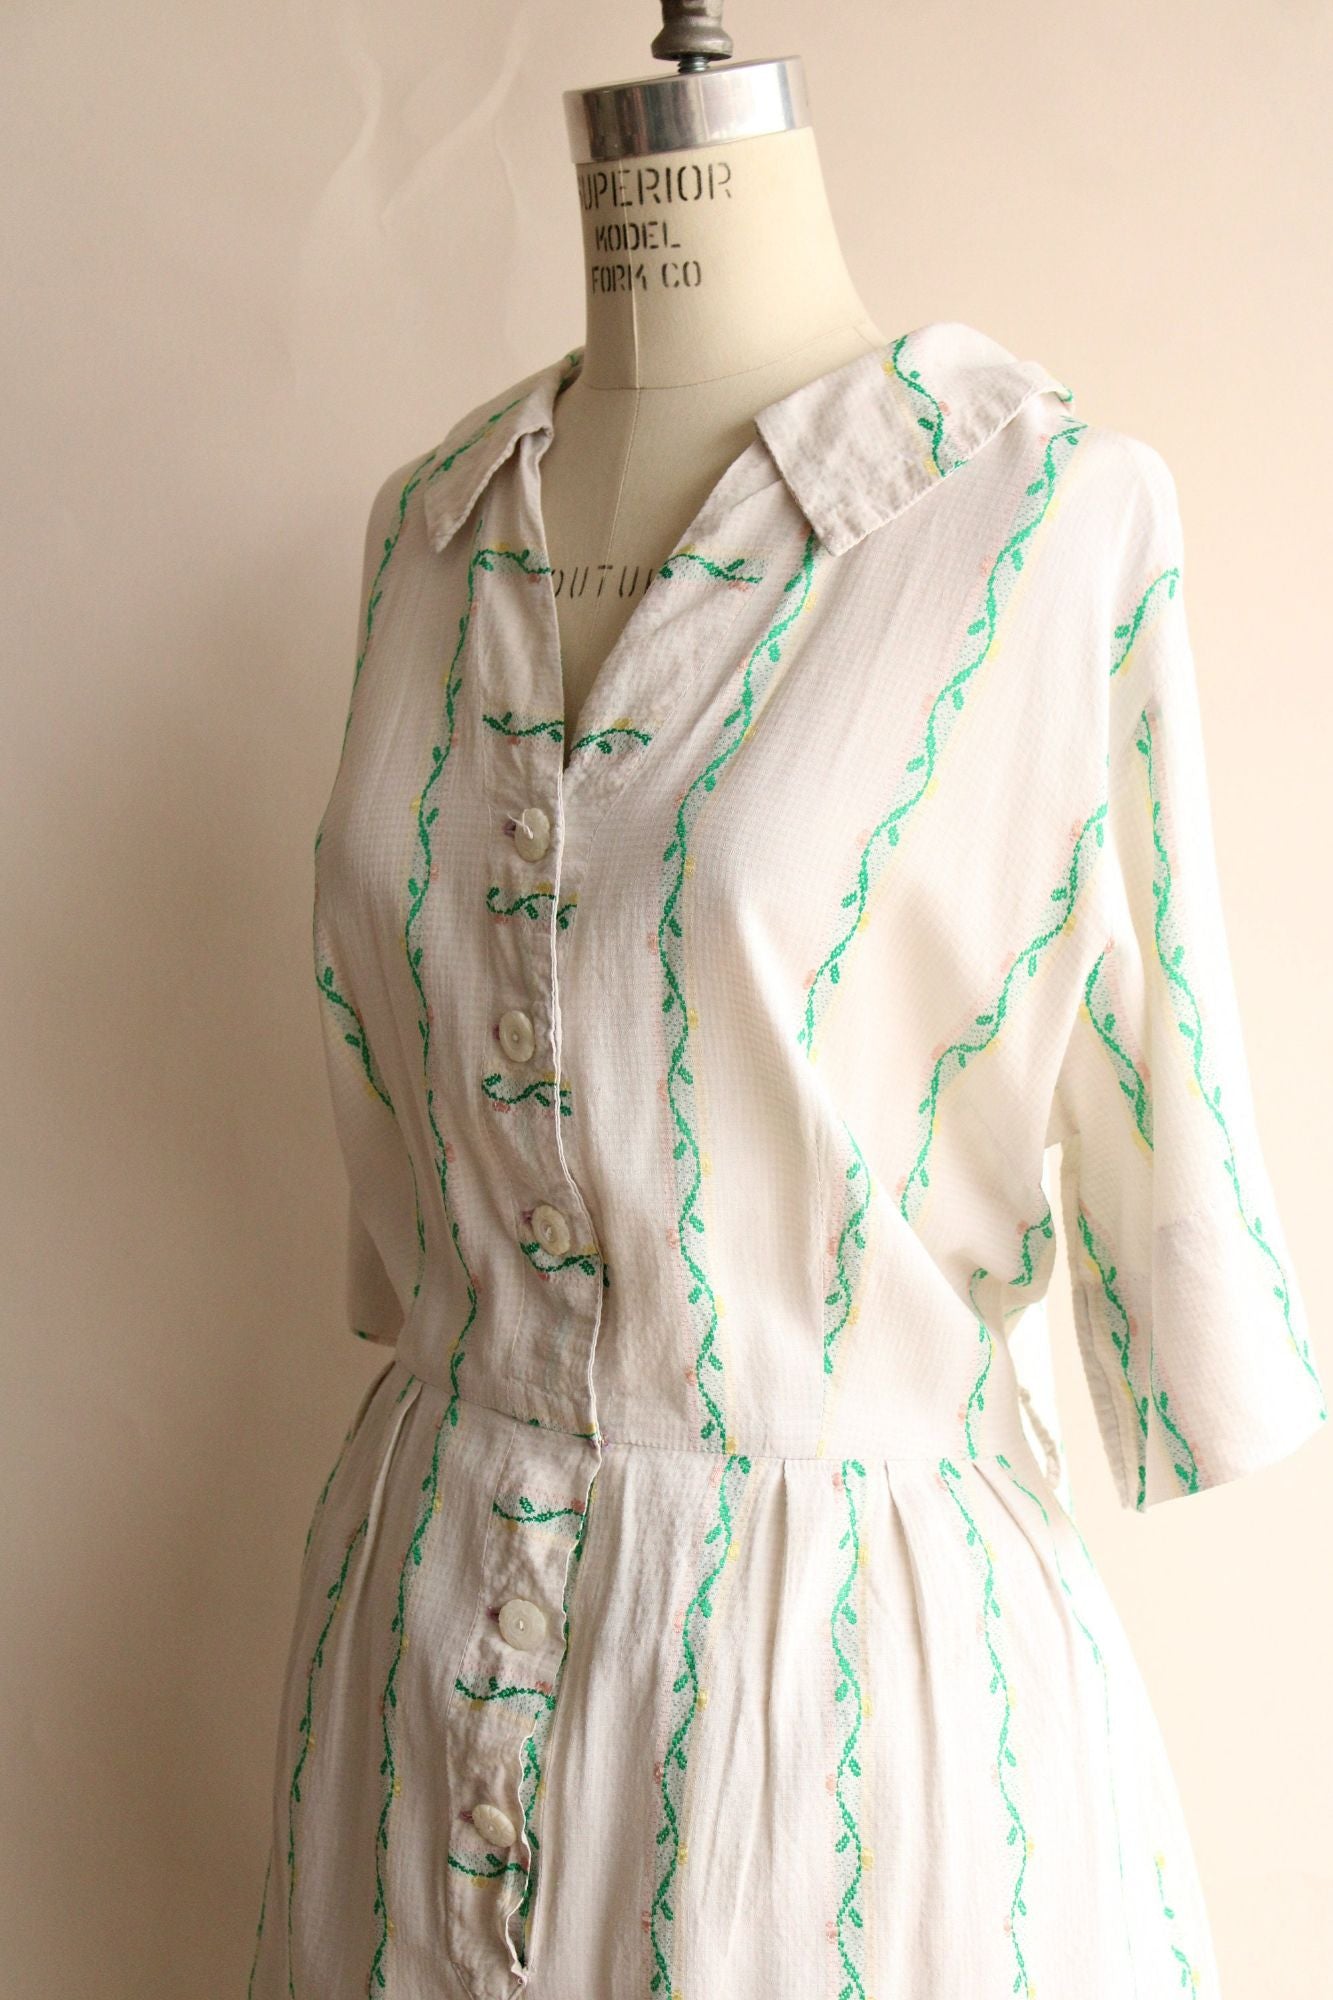 Vintage 1940s 1950s Volup Cotton Shirtwaist Dress with Pocket